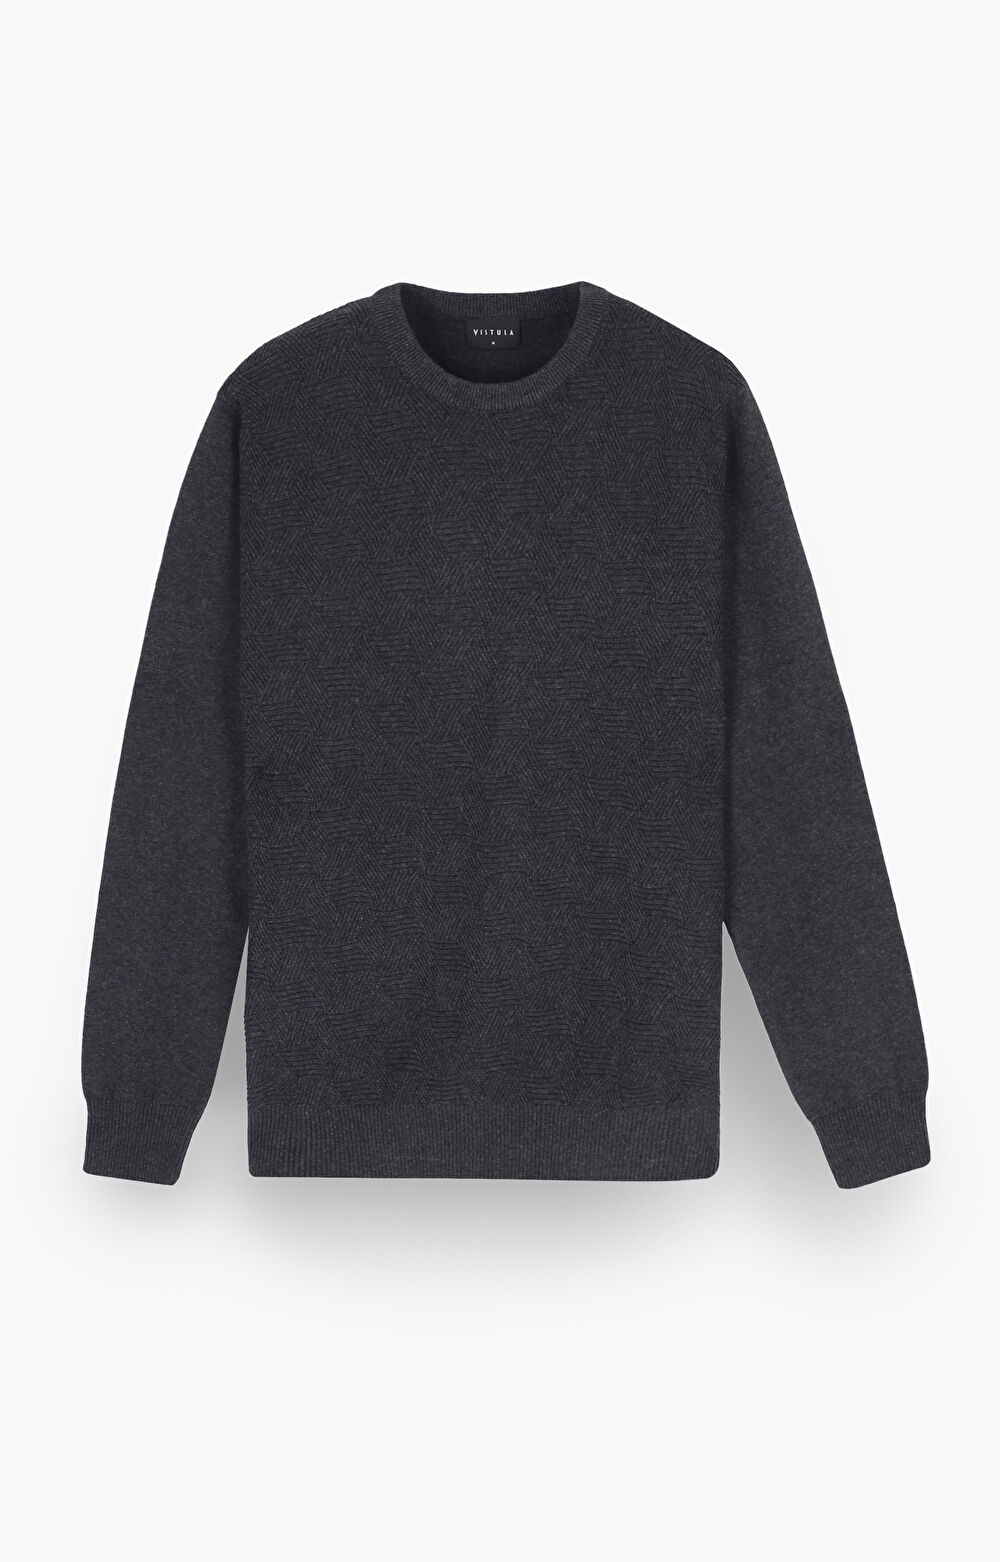 Sweter z wzorem